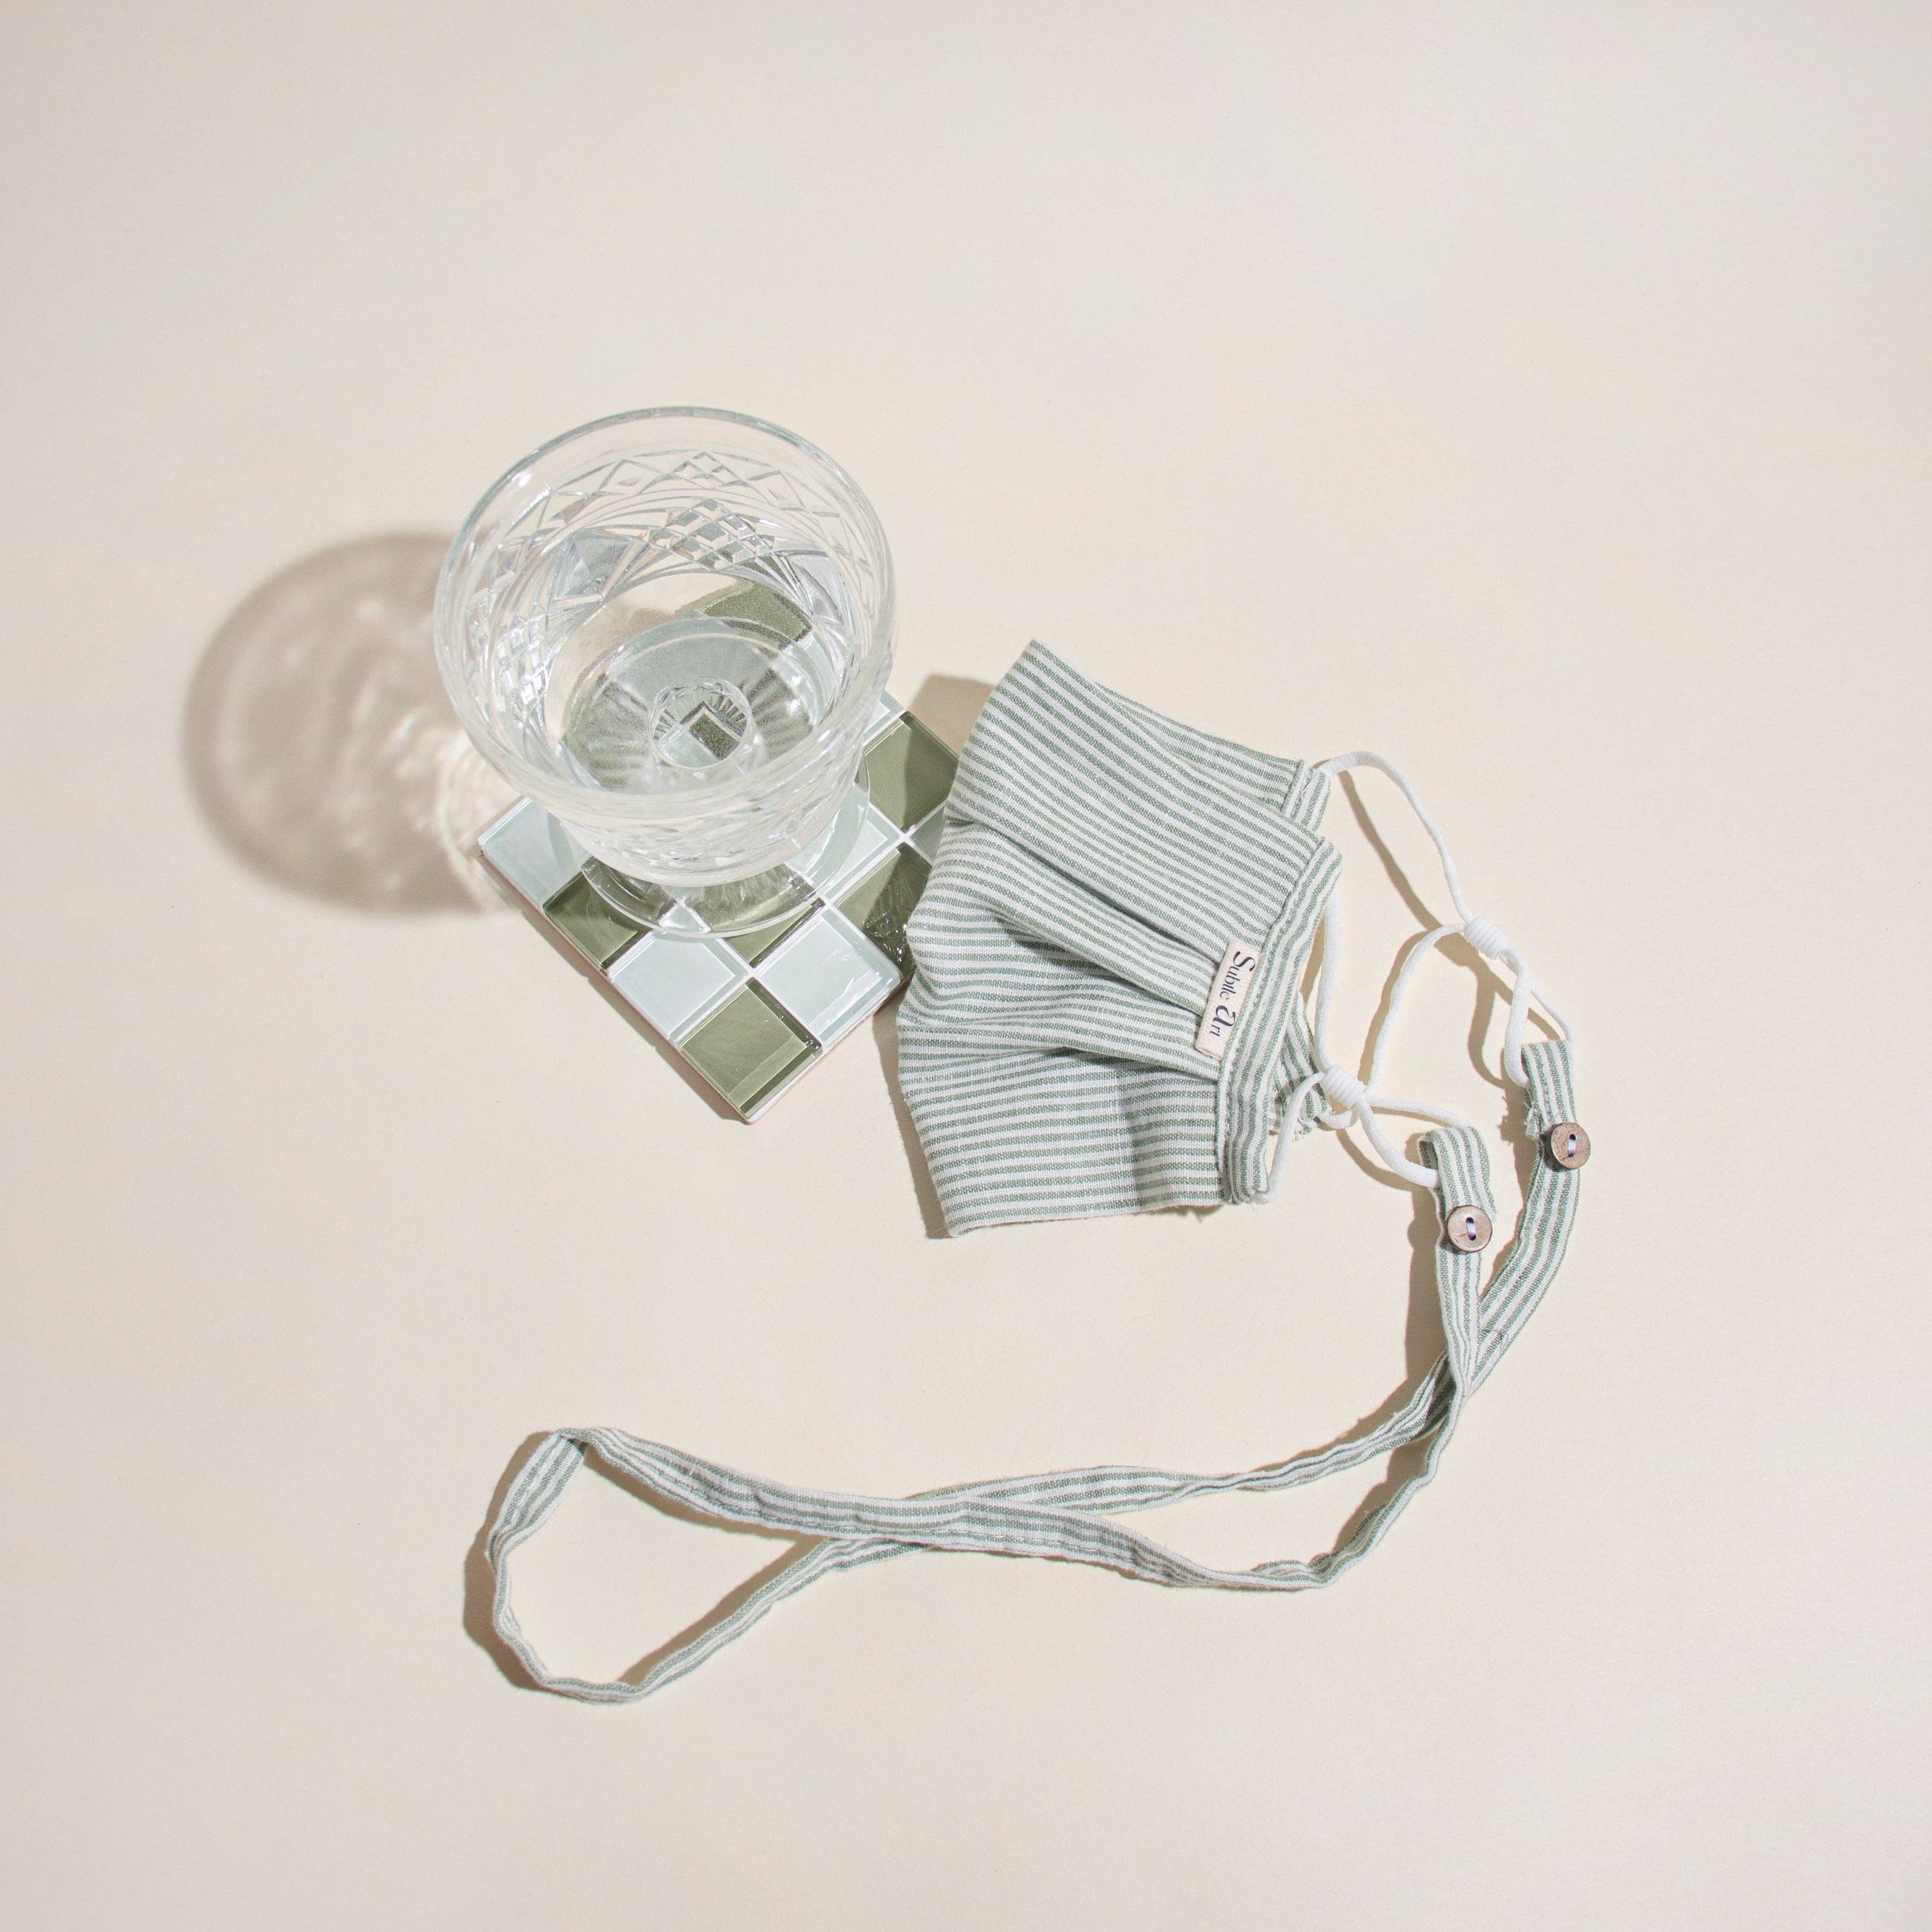 GLASS TILE COASTER - Matcha Milk Chocolate by Subtle Art Studios